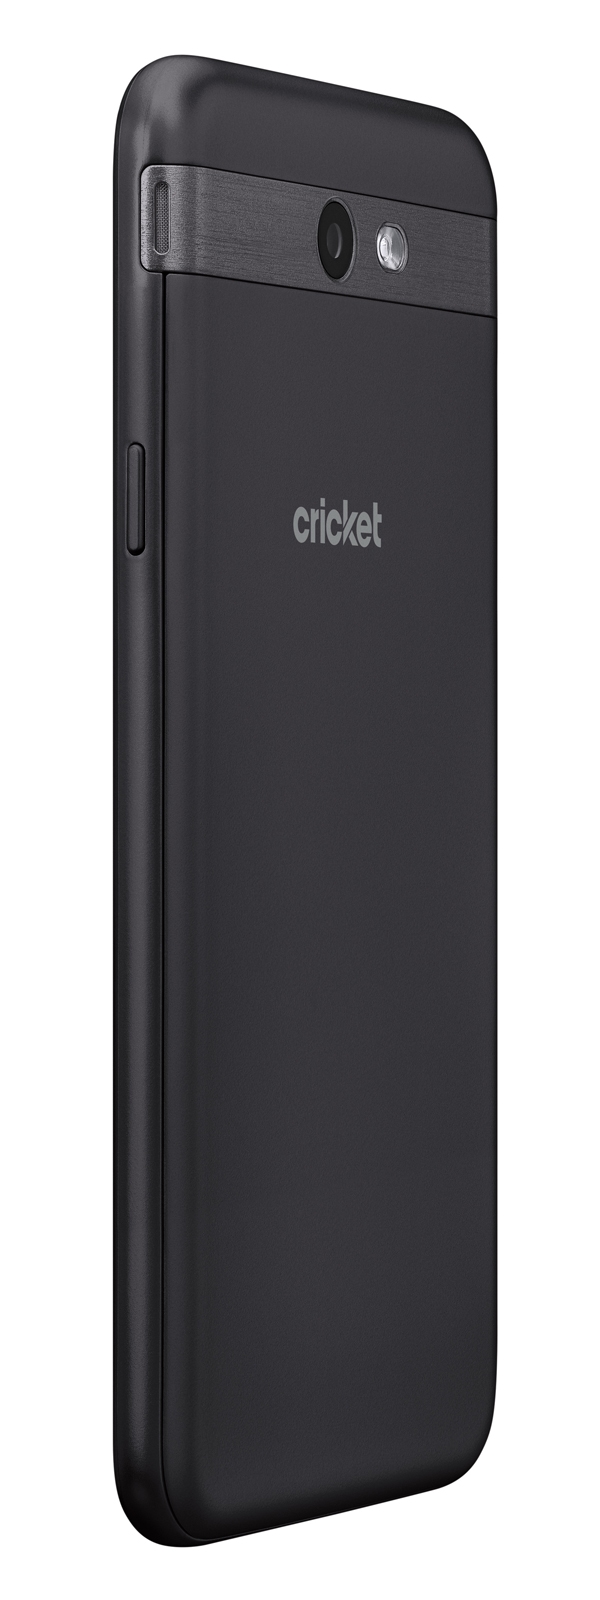 Galaxy Halo (Cricket) Phones - SM-J727AZKZAIO | Samsung US